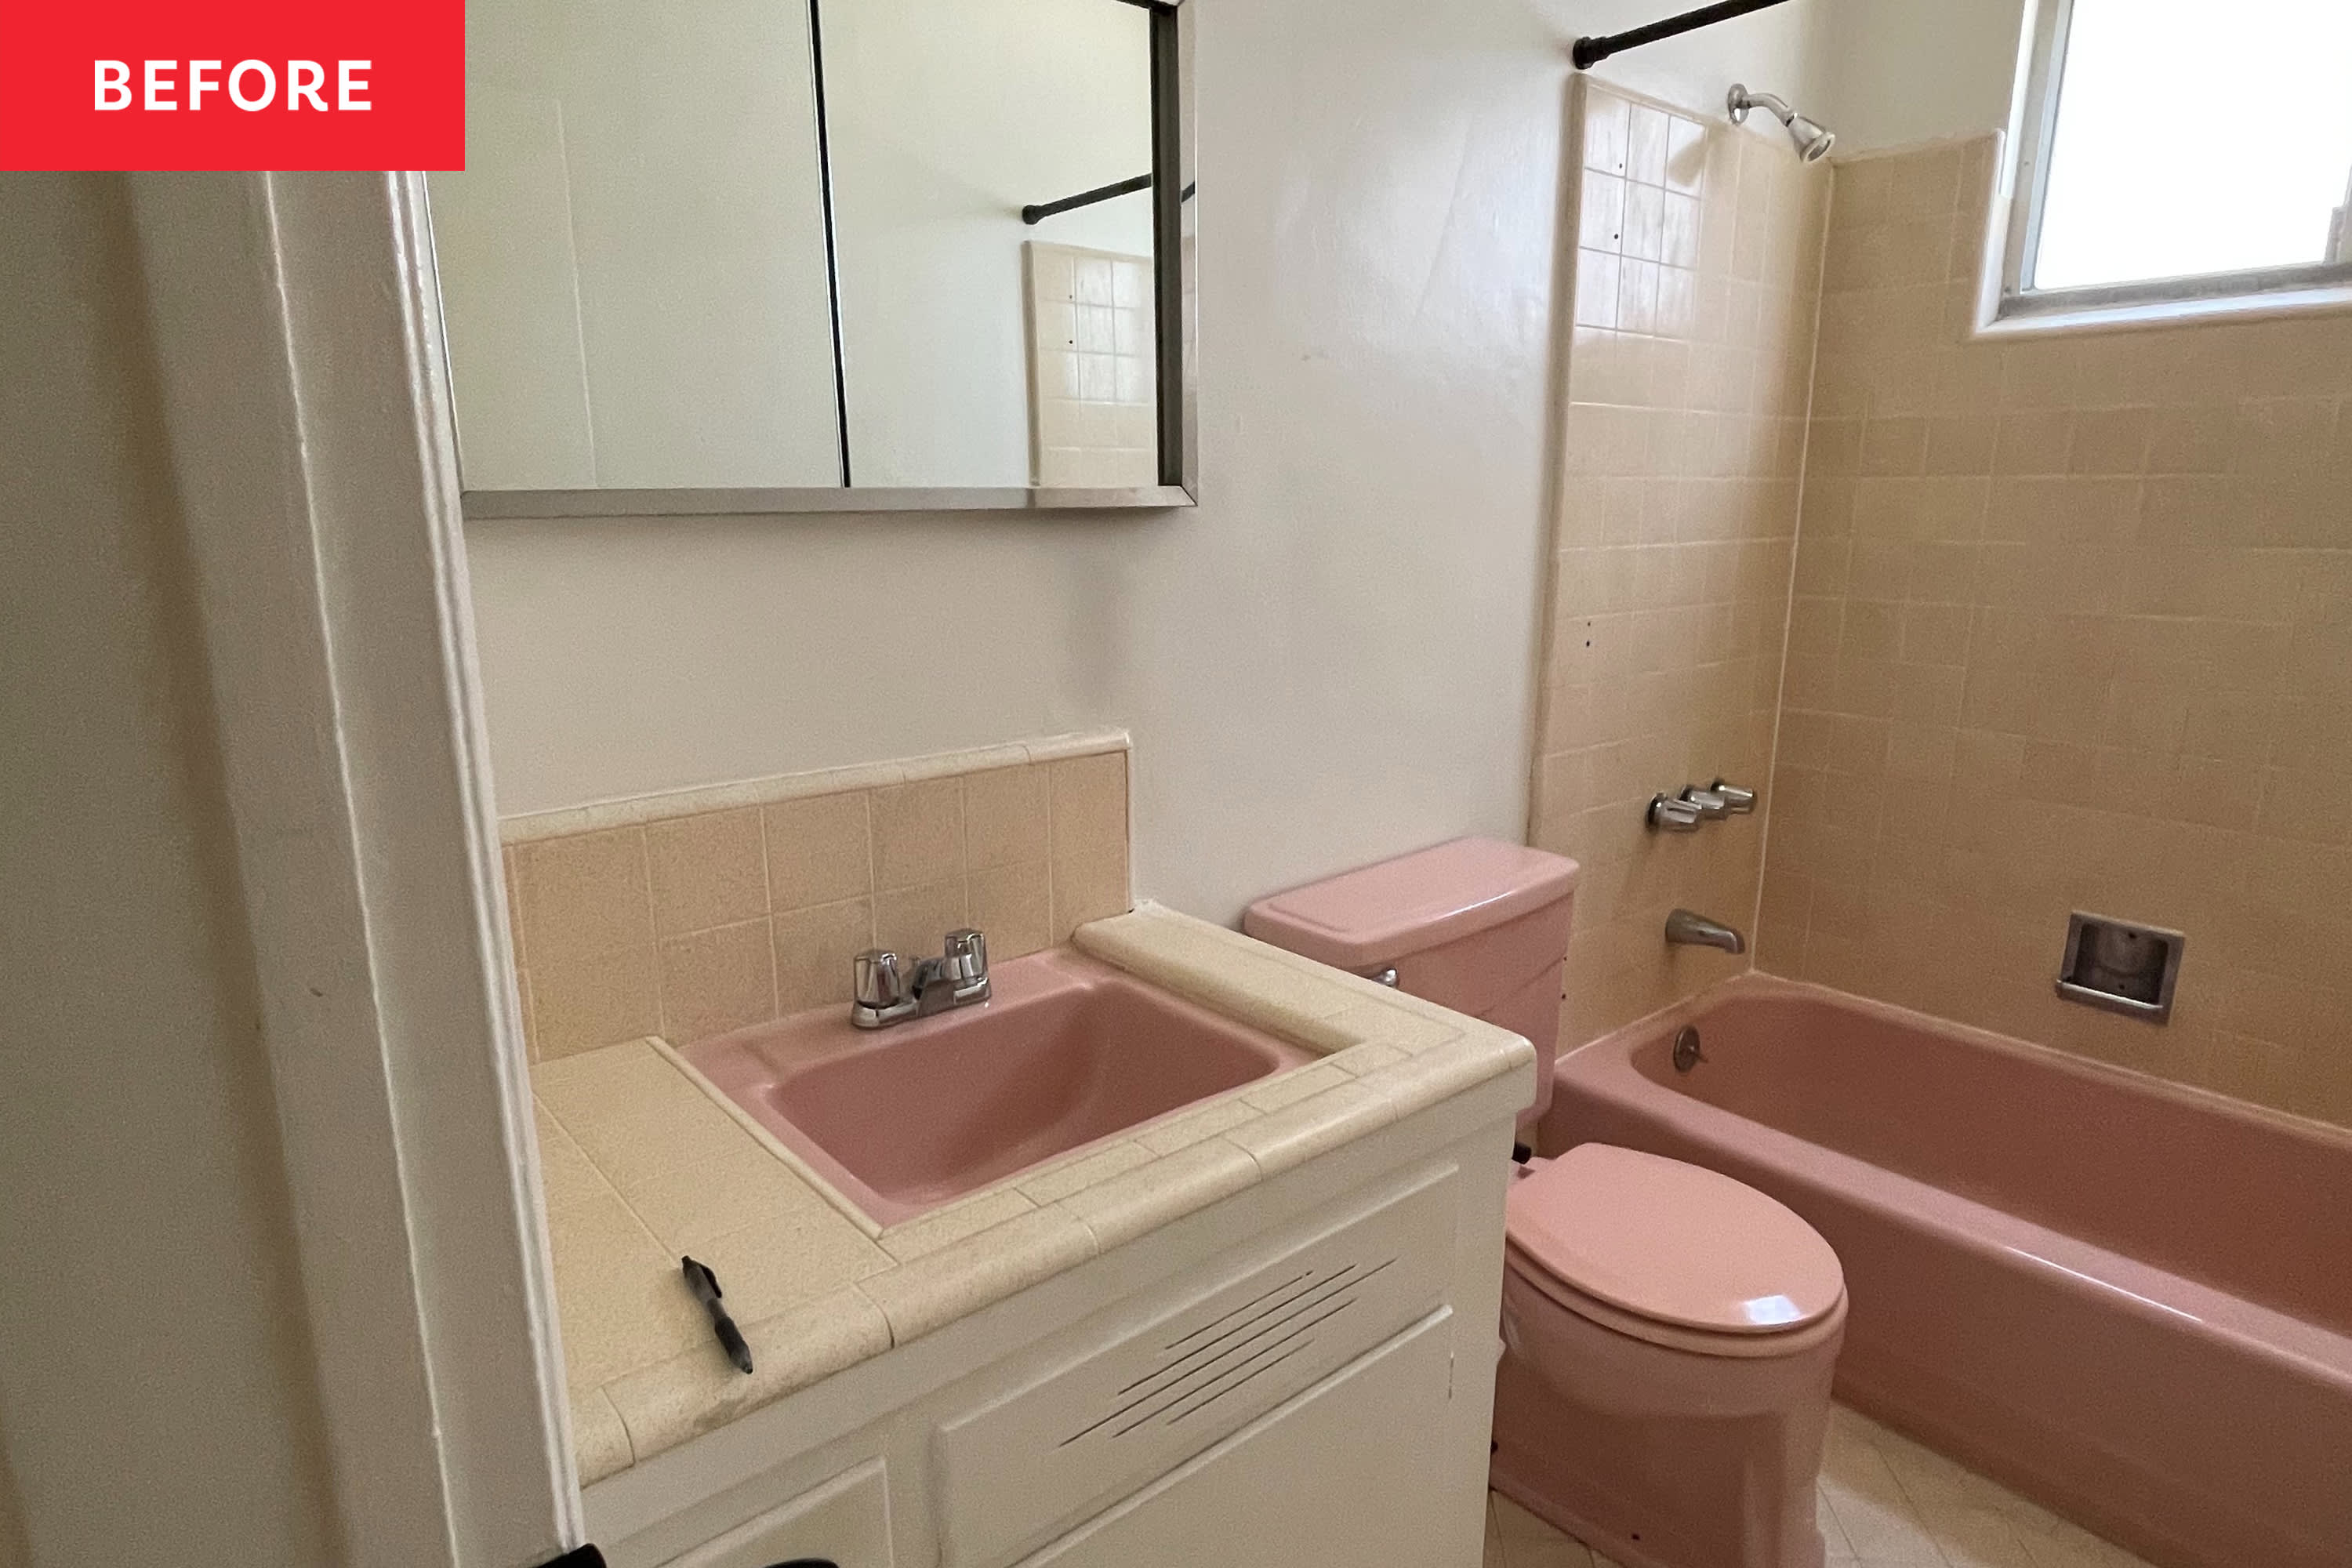 https://cdn.apartmenttherapy.info/image/upload/v1686253851/at/home-projects/2023-06/daniella-c-bathroom/daniella-c-bathroom-before-6891.jpg